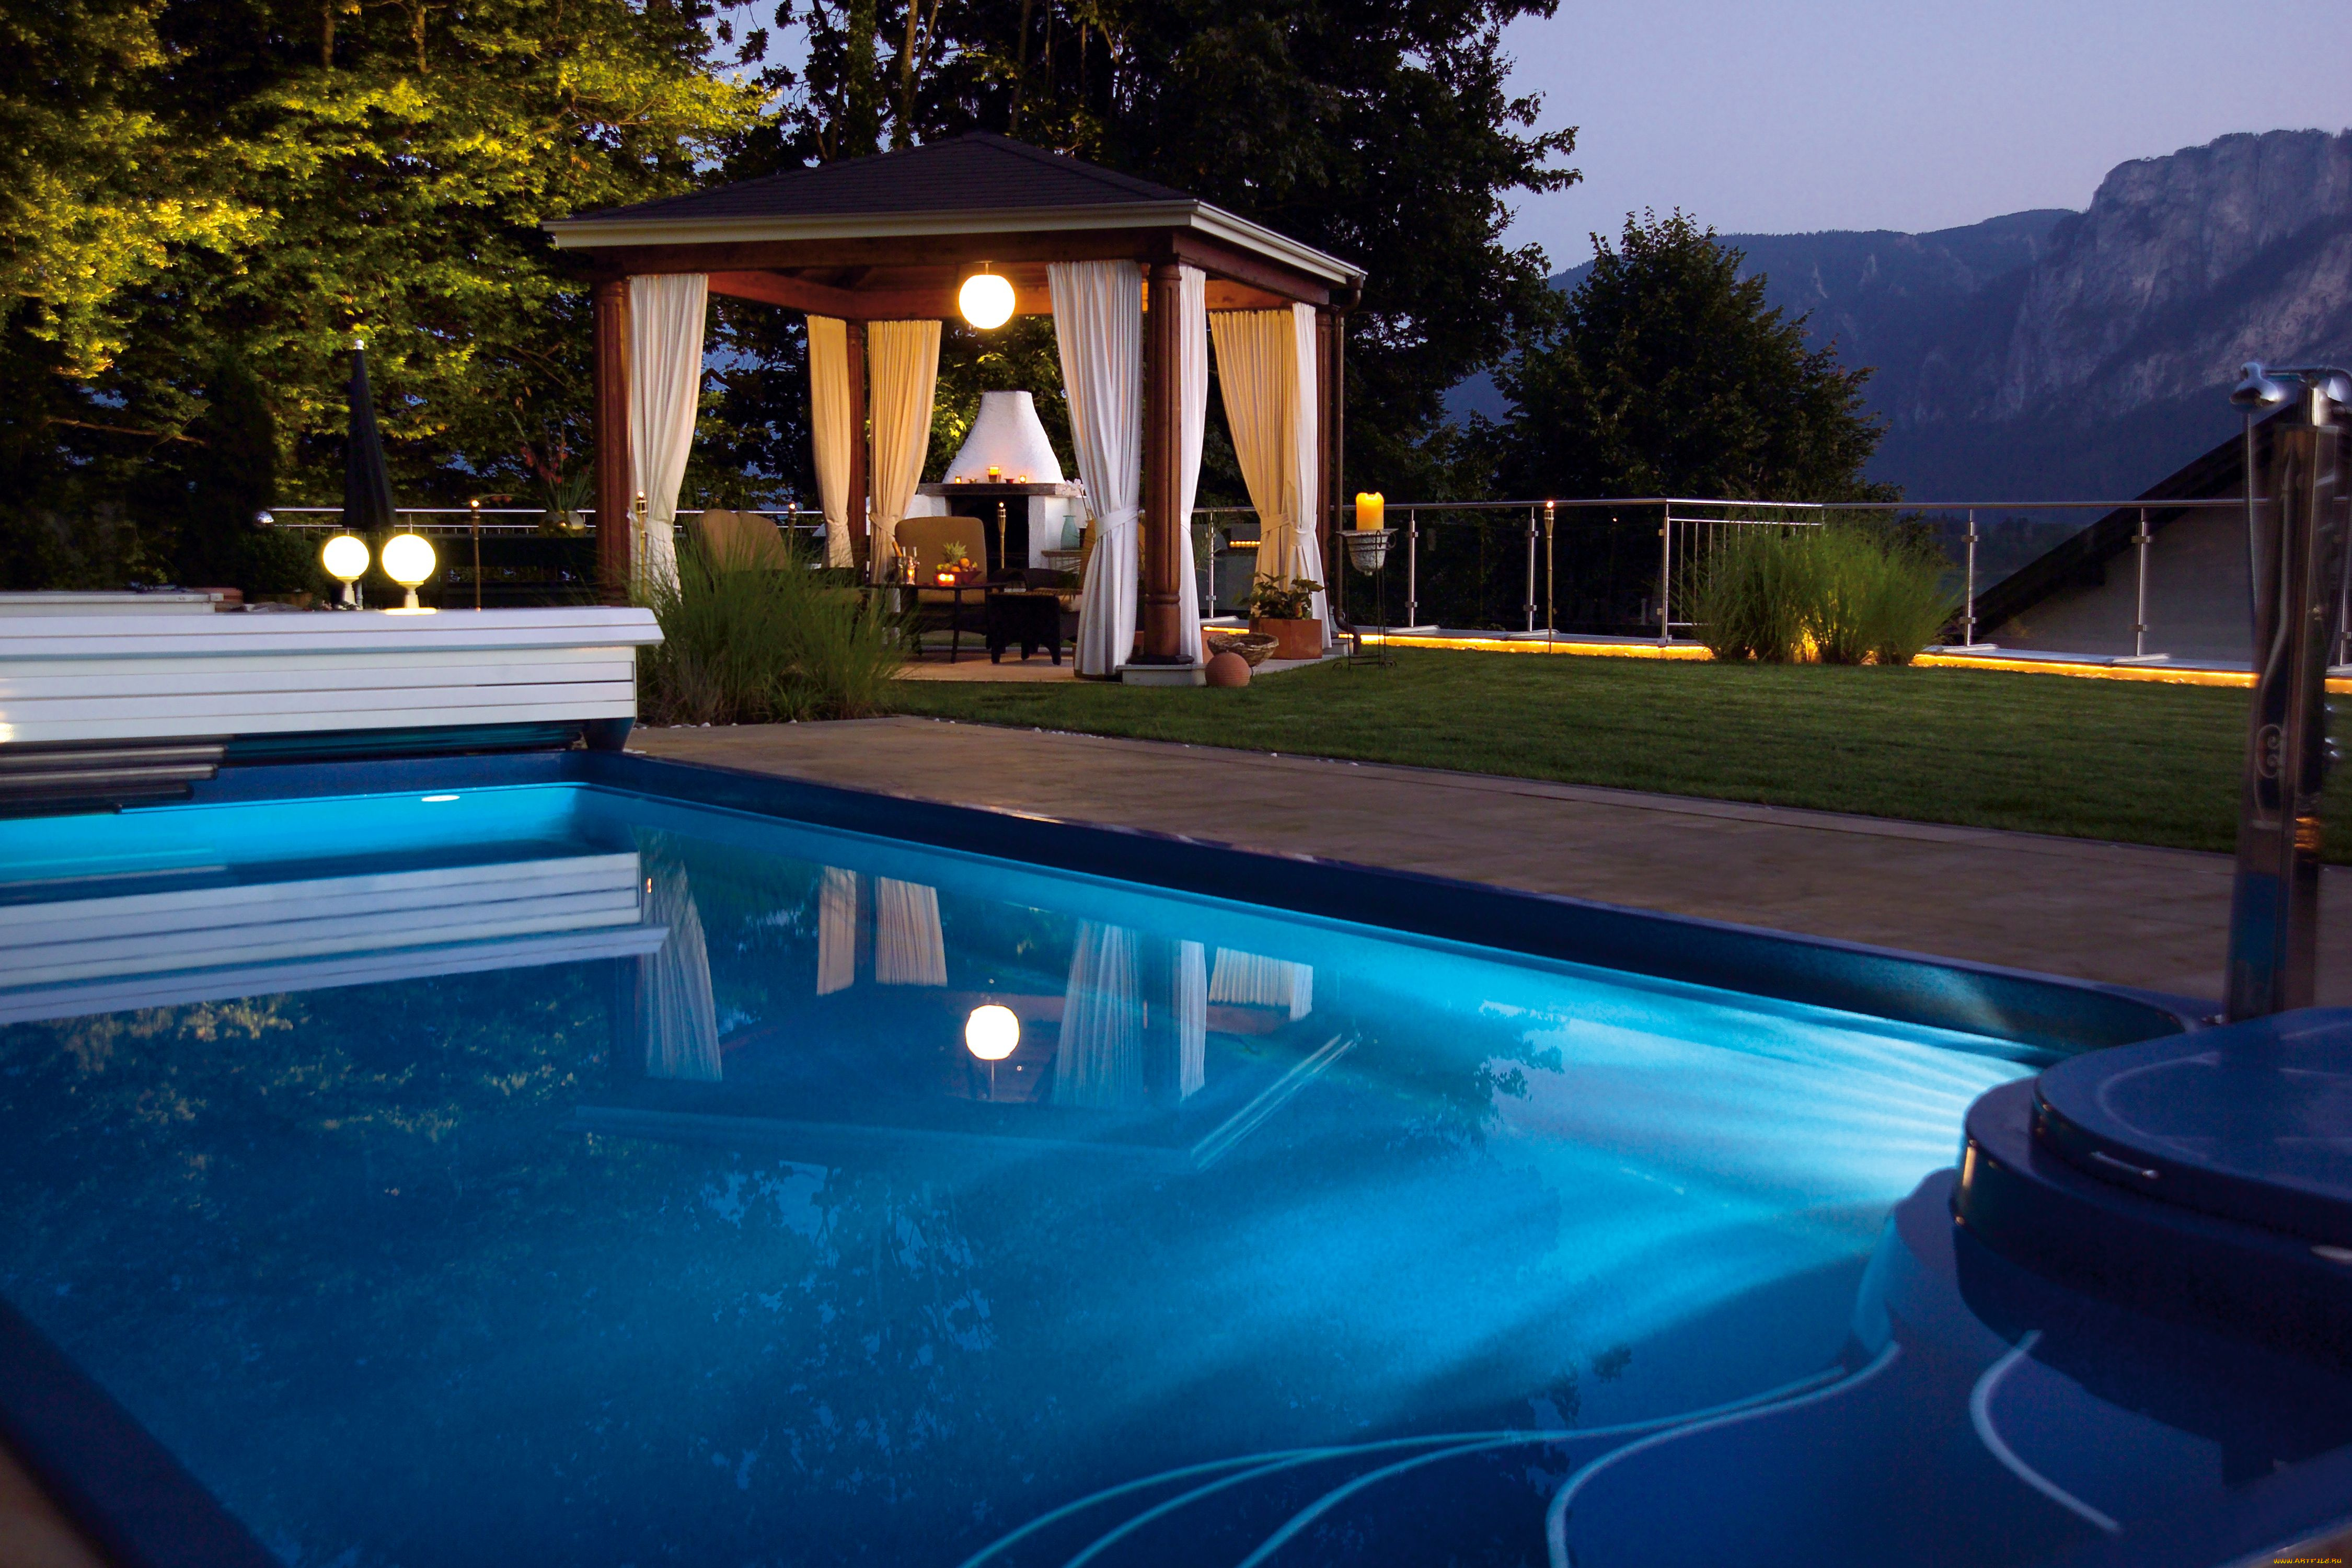 Rplant pool. Красивый бассейн. Шикарный бассейн на улице. Дом с бассейном. Красивые бассейны на даче.